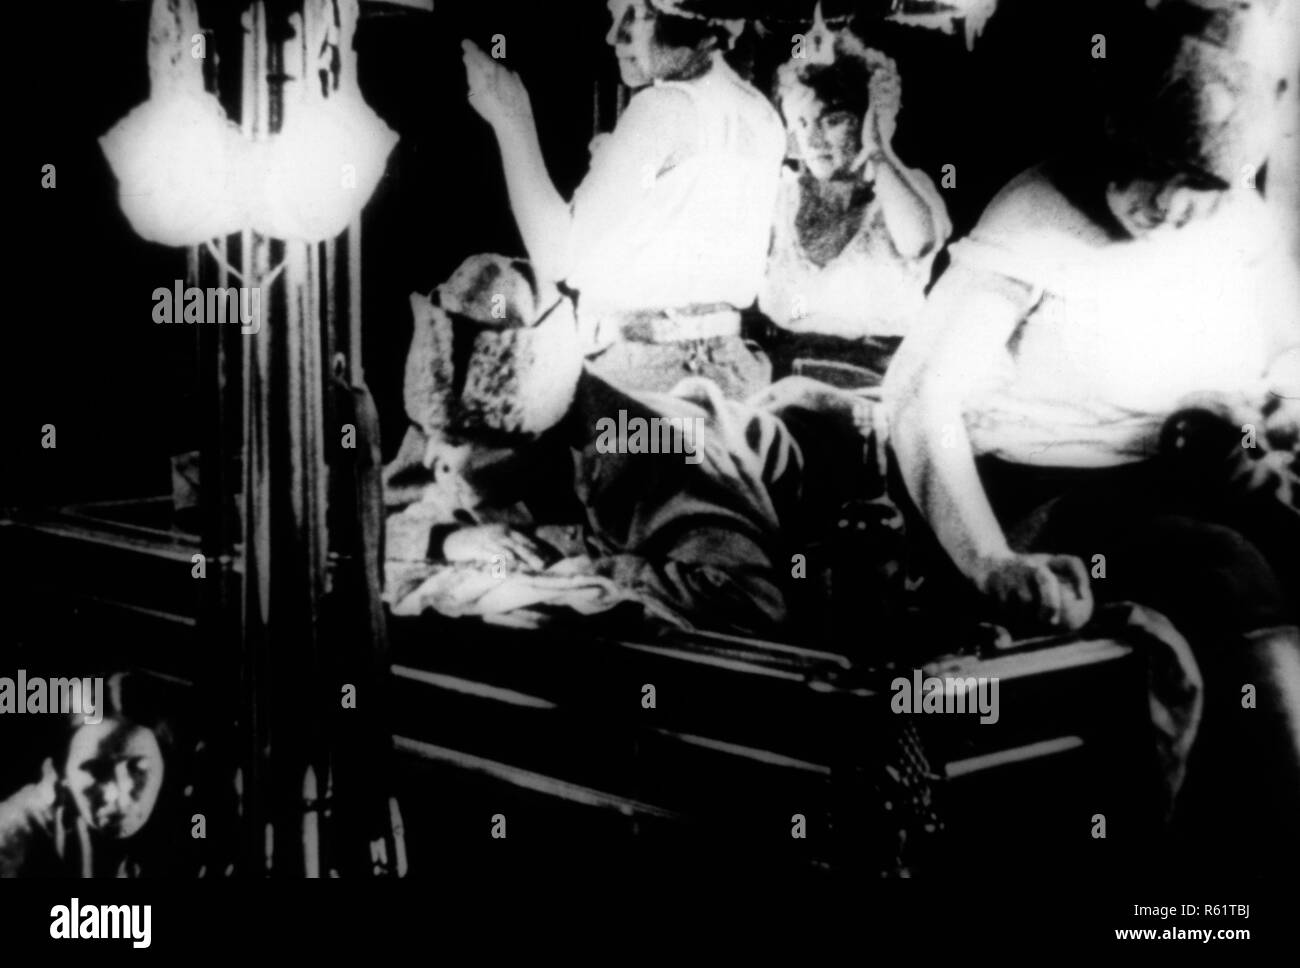 Original film title: OKTYABR. English title: TEN DAYS THAT SHOOK THE WORLD. Year: 1928. Director: SERGEI M. EISENSTEIN; GRIGORI ALEKSANDROV. Stars: ANONYMOUS. Credit: SOVKINO / Album Stock Photo